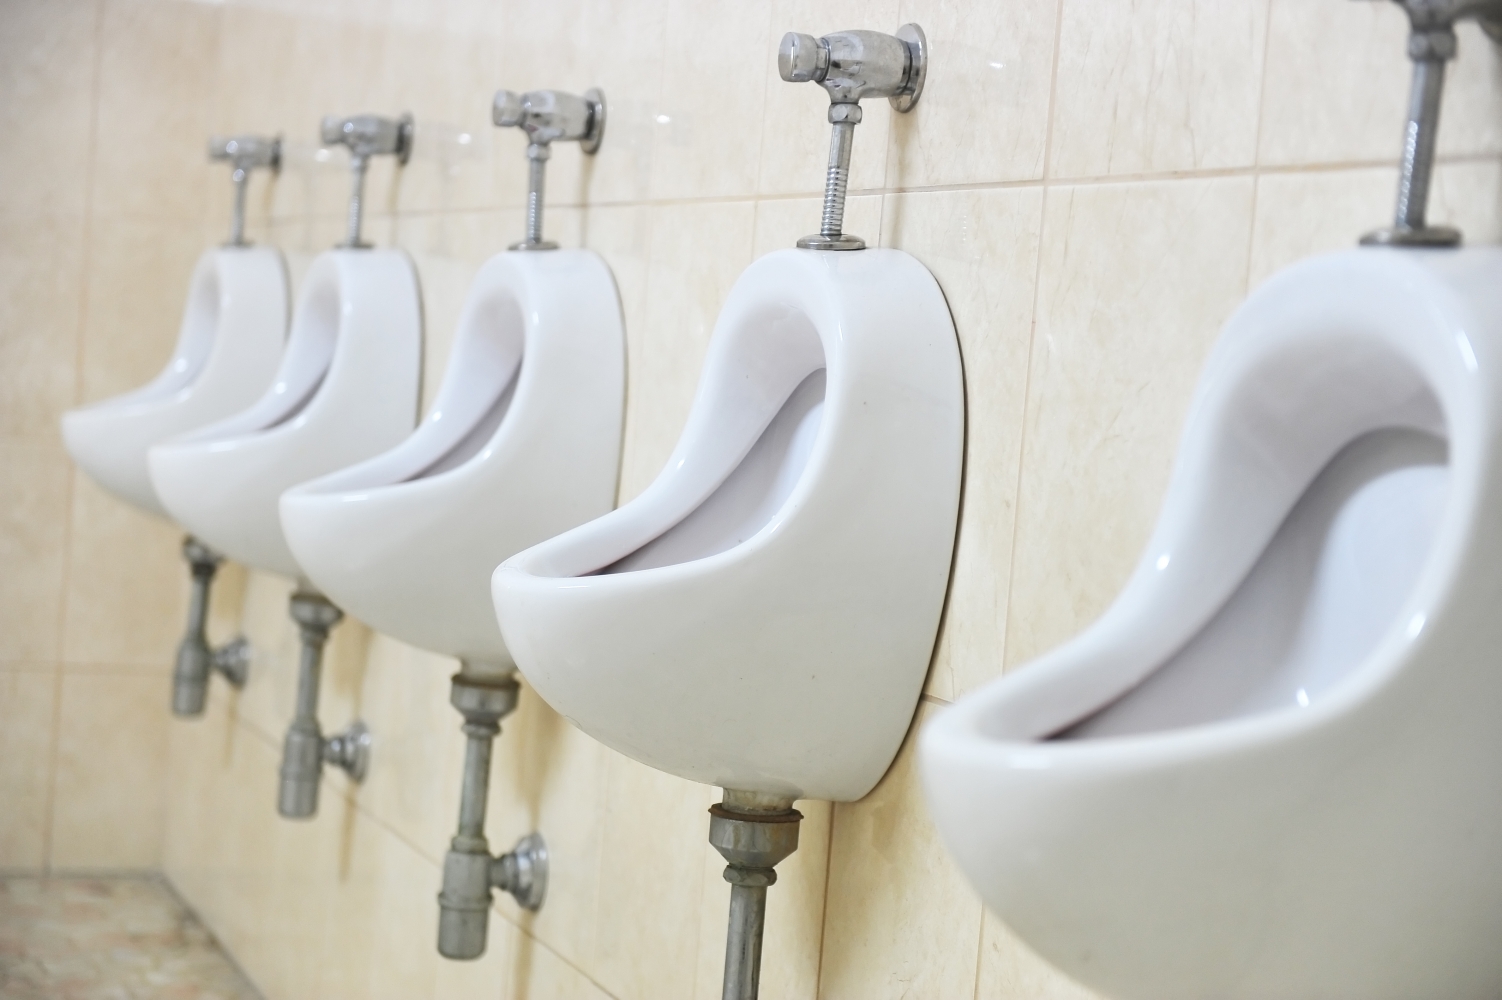 Splash Screen is a hygiene invention designed to prevent back splash when using  urinals.